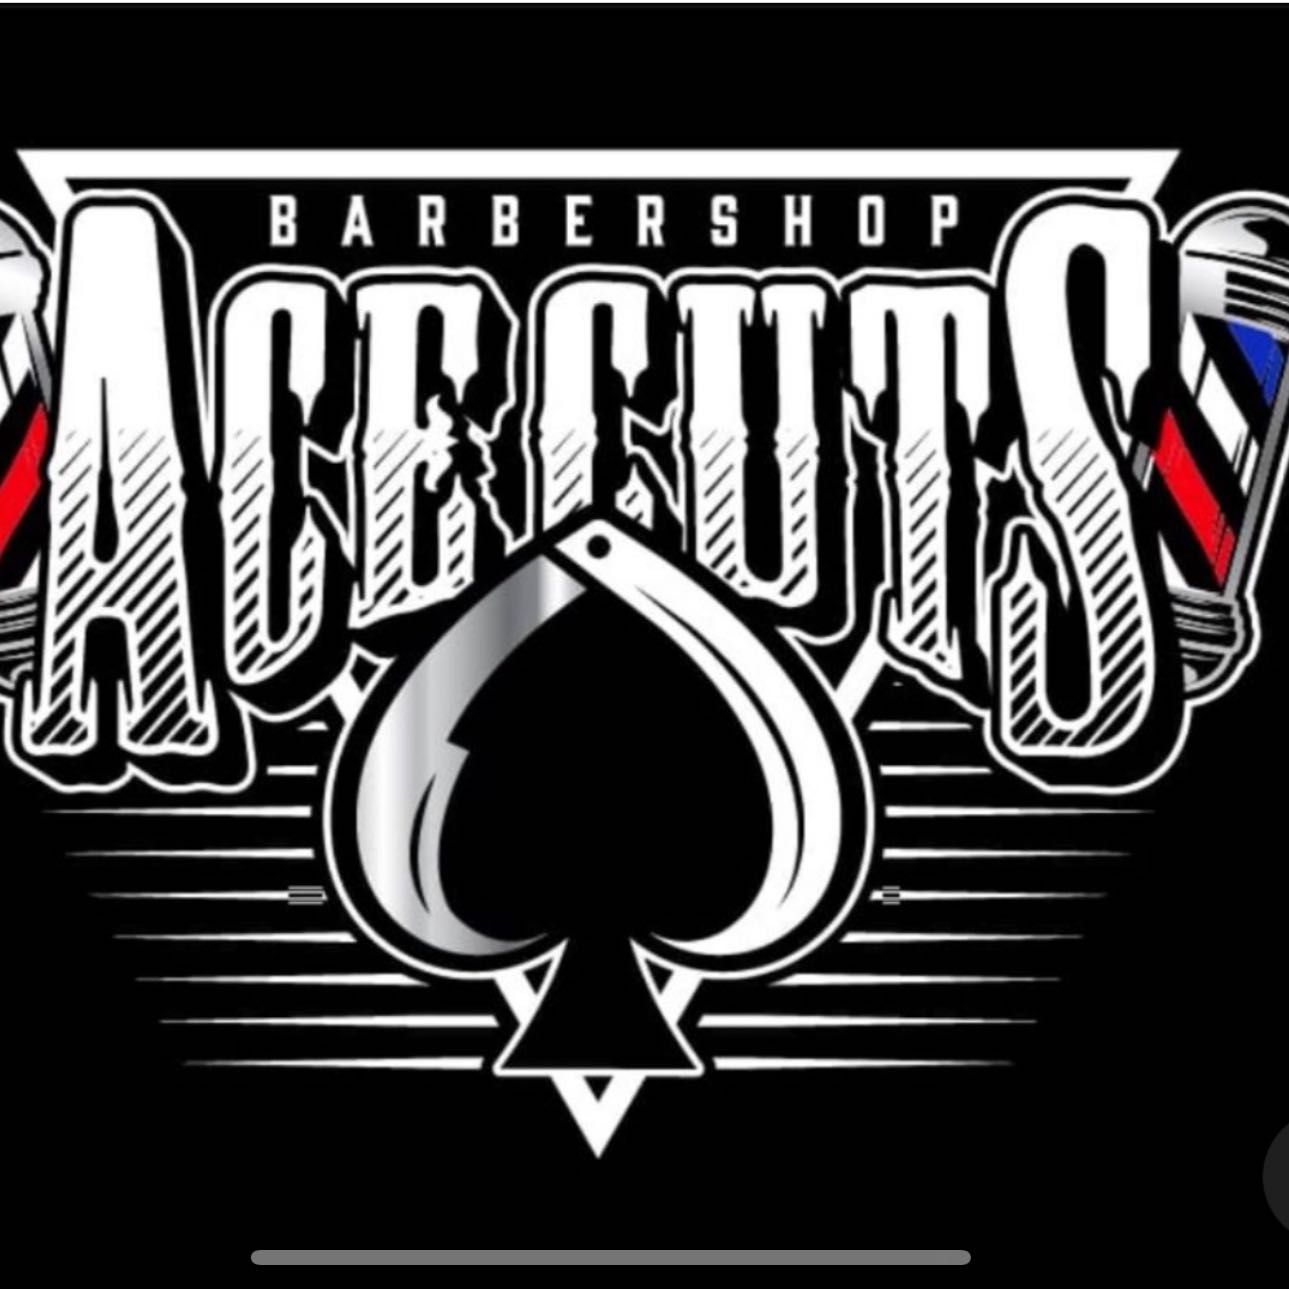 Ace Cuts Barbershop US-1, 12100 highway us 1, Suite K, Palm Beach, 33408